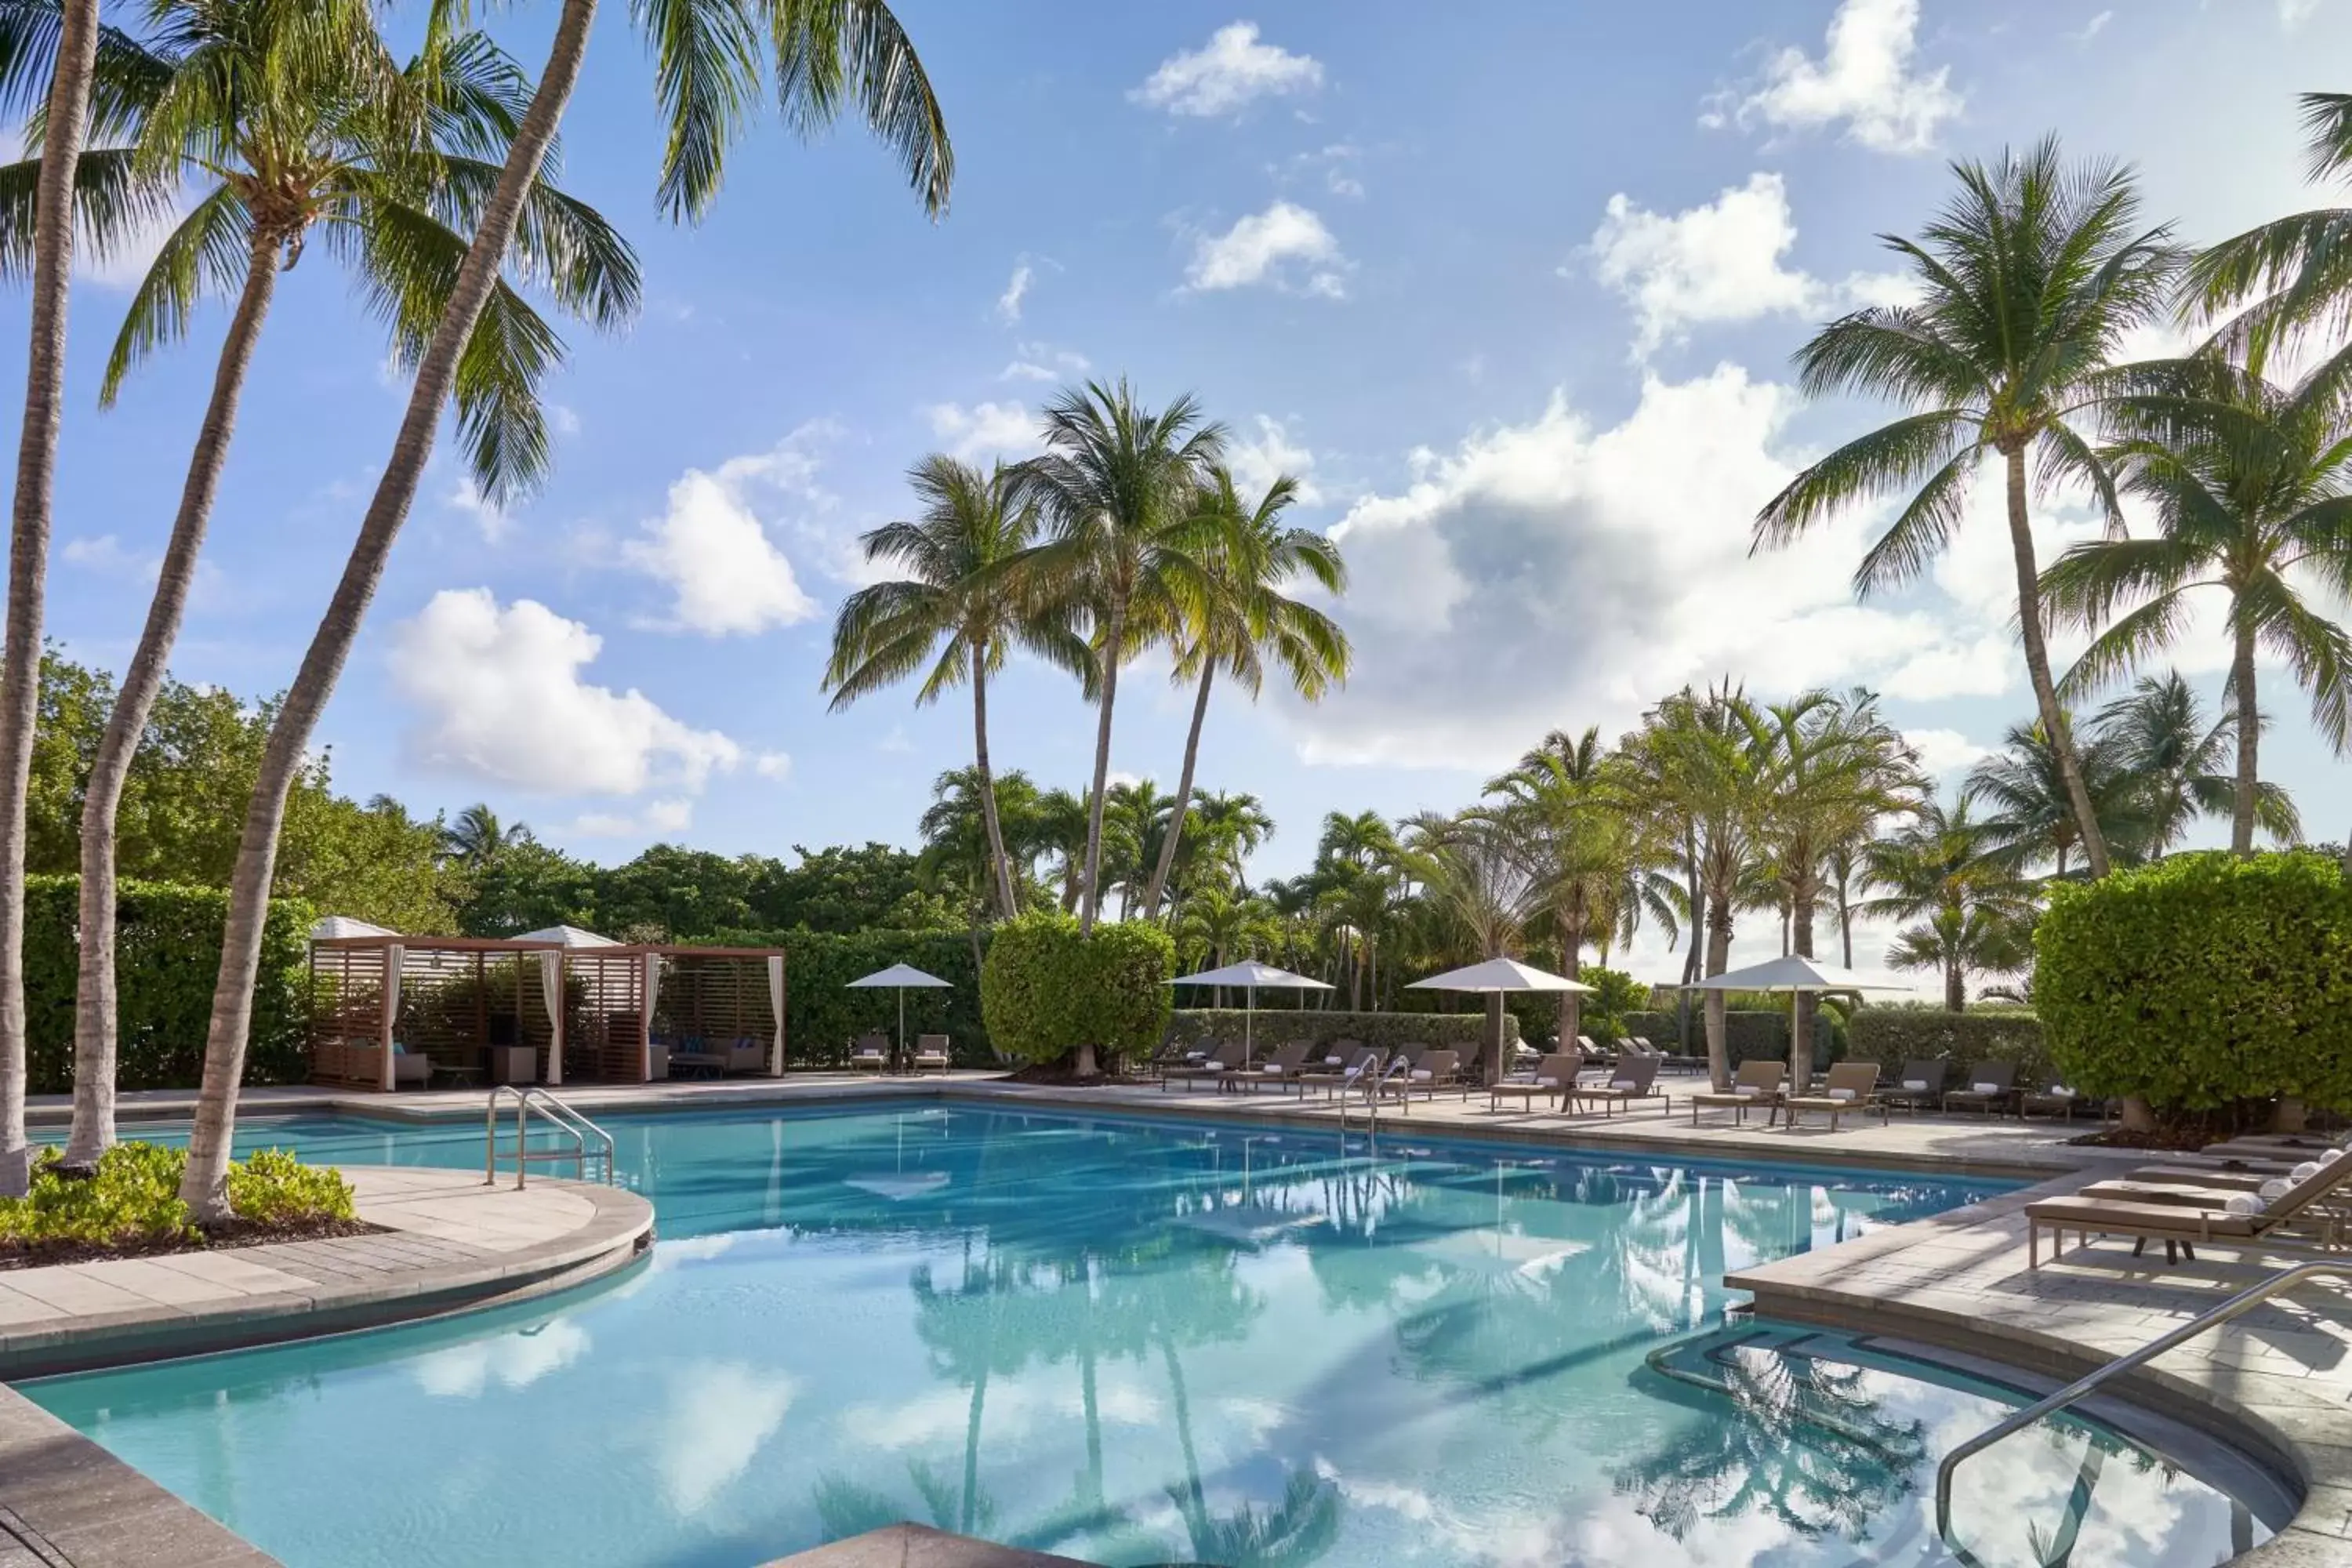 Swimming Pool in The Ritz Carlton Key Biscayne, Miami